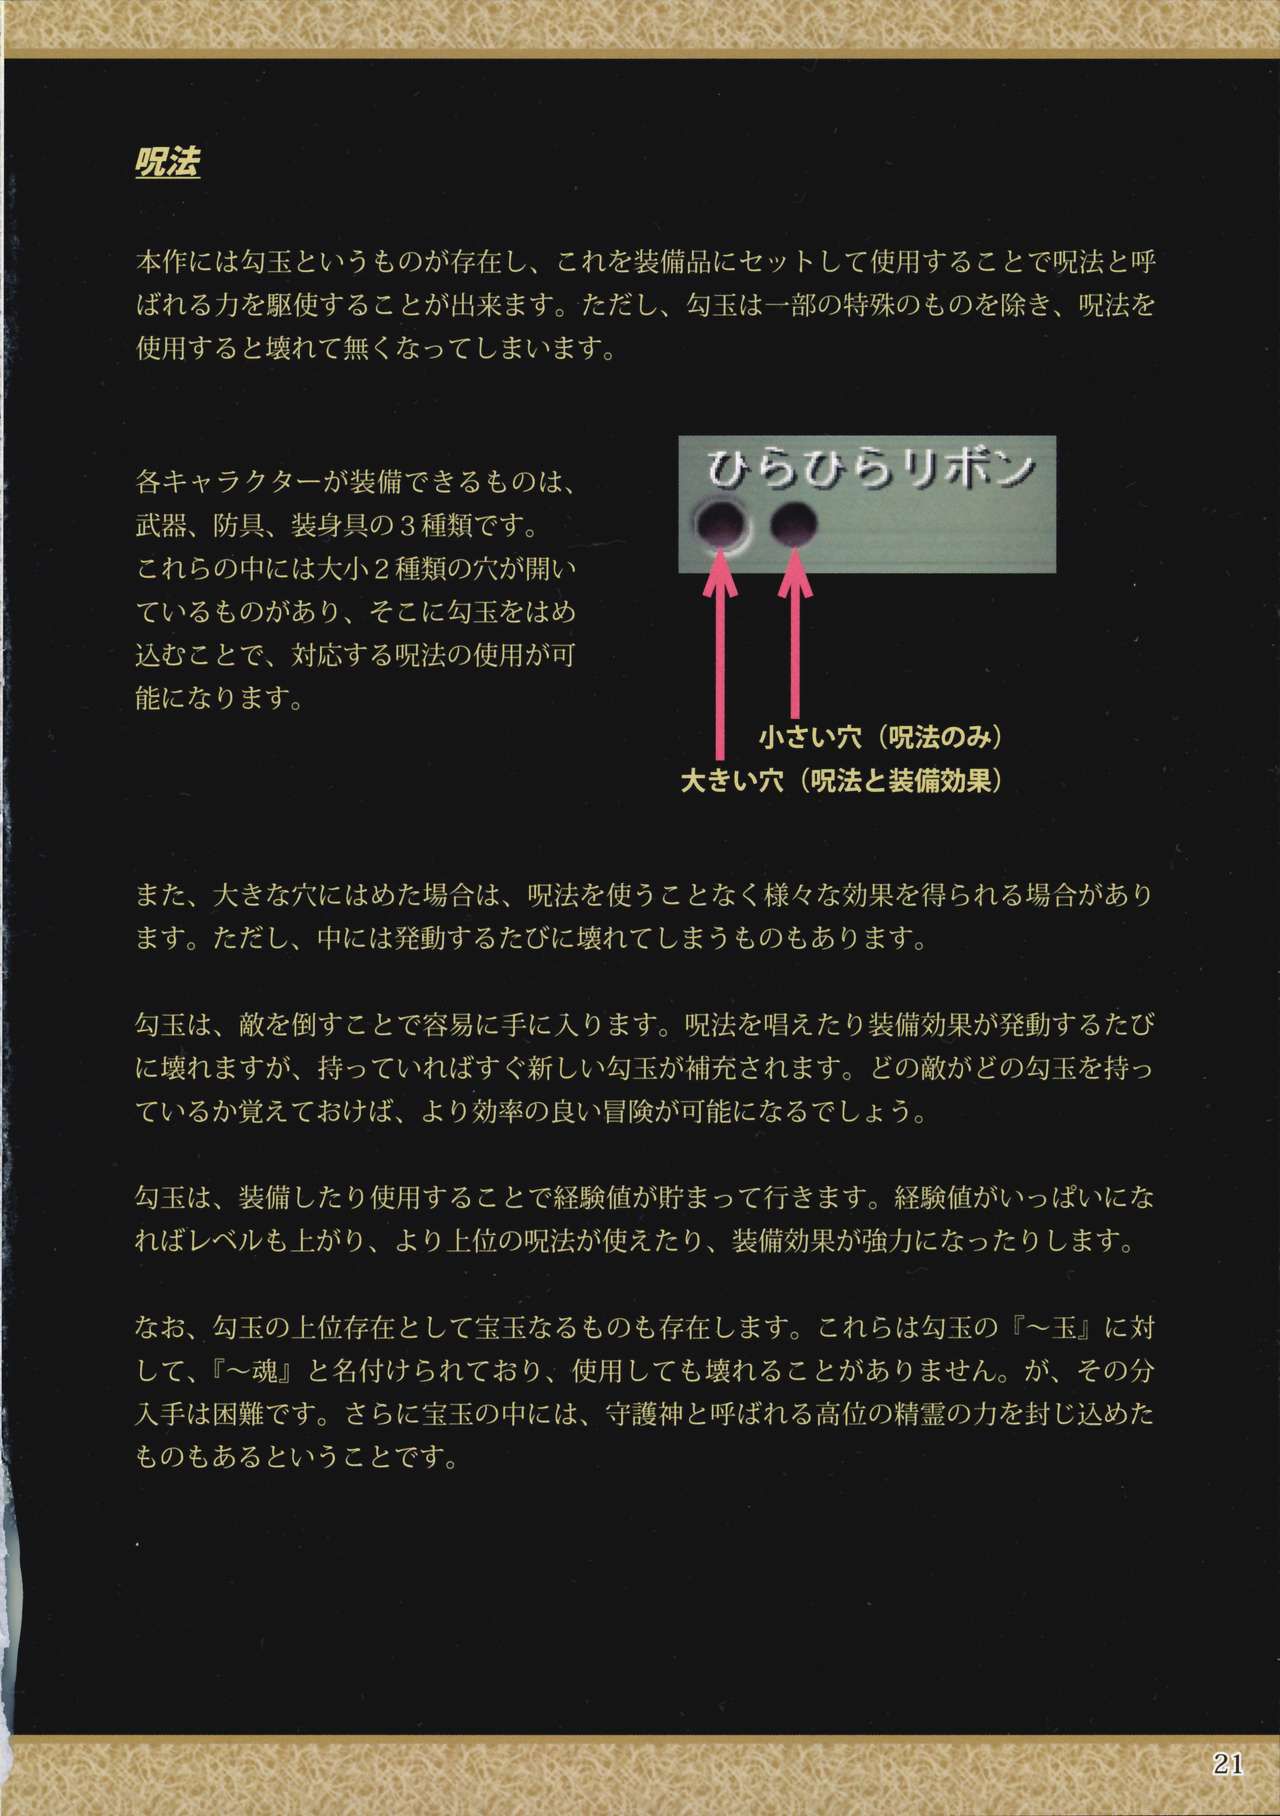 IZUMO 3 - Special Edition Manual 38